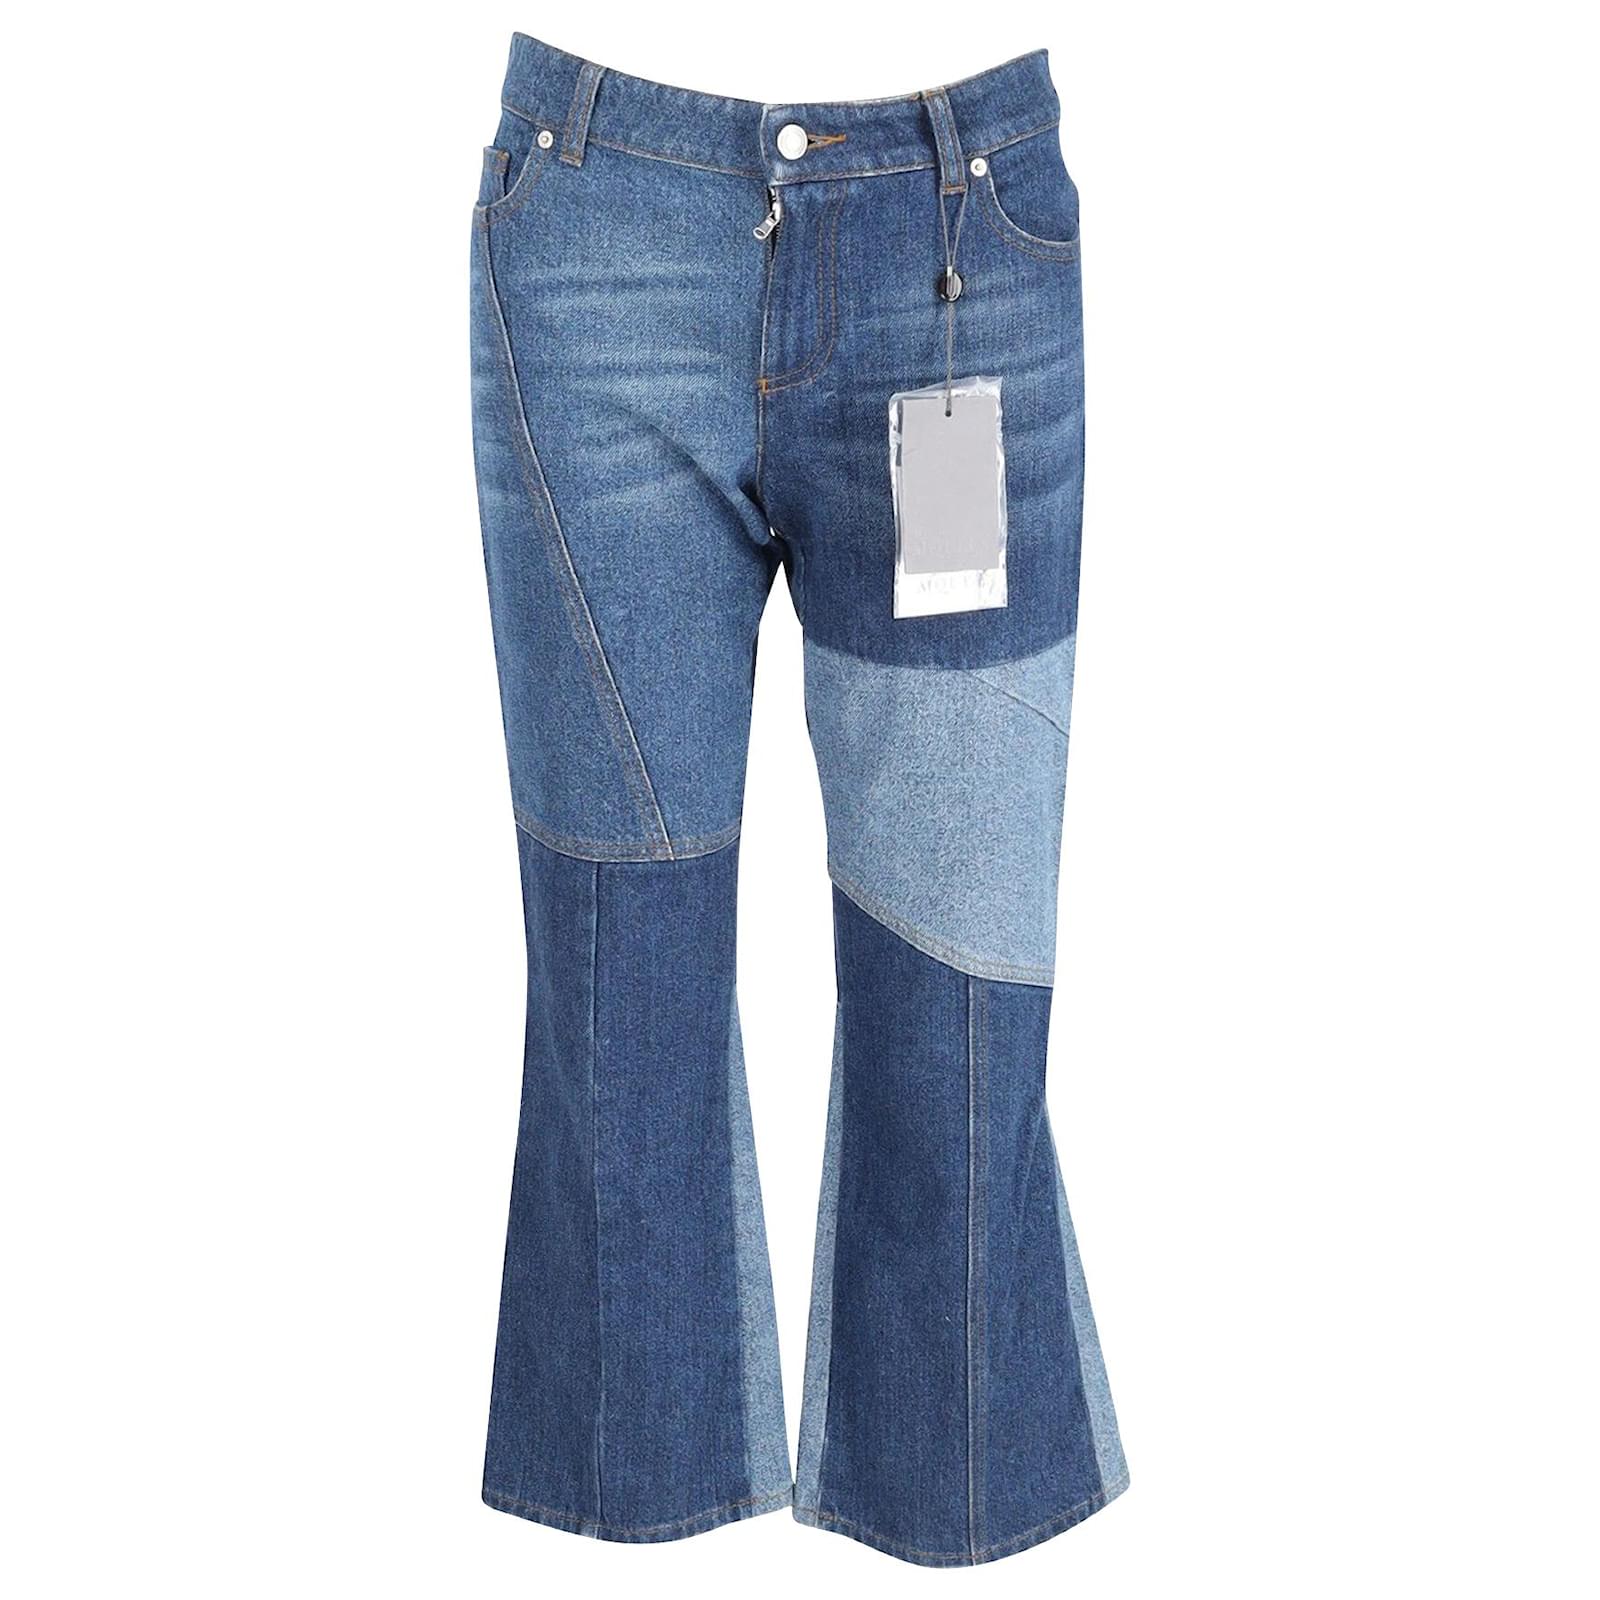 https://cdn1.jolicloset.com/imgr/full/2023/06/898194-1/alexander-mcqueen-panelled-kick-flare-jeans-in-blue-cotton.jpg